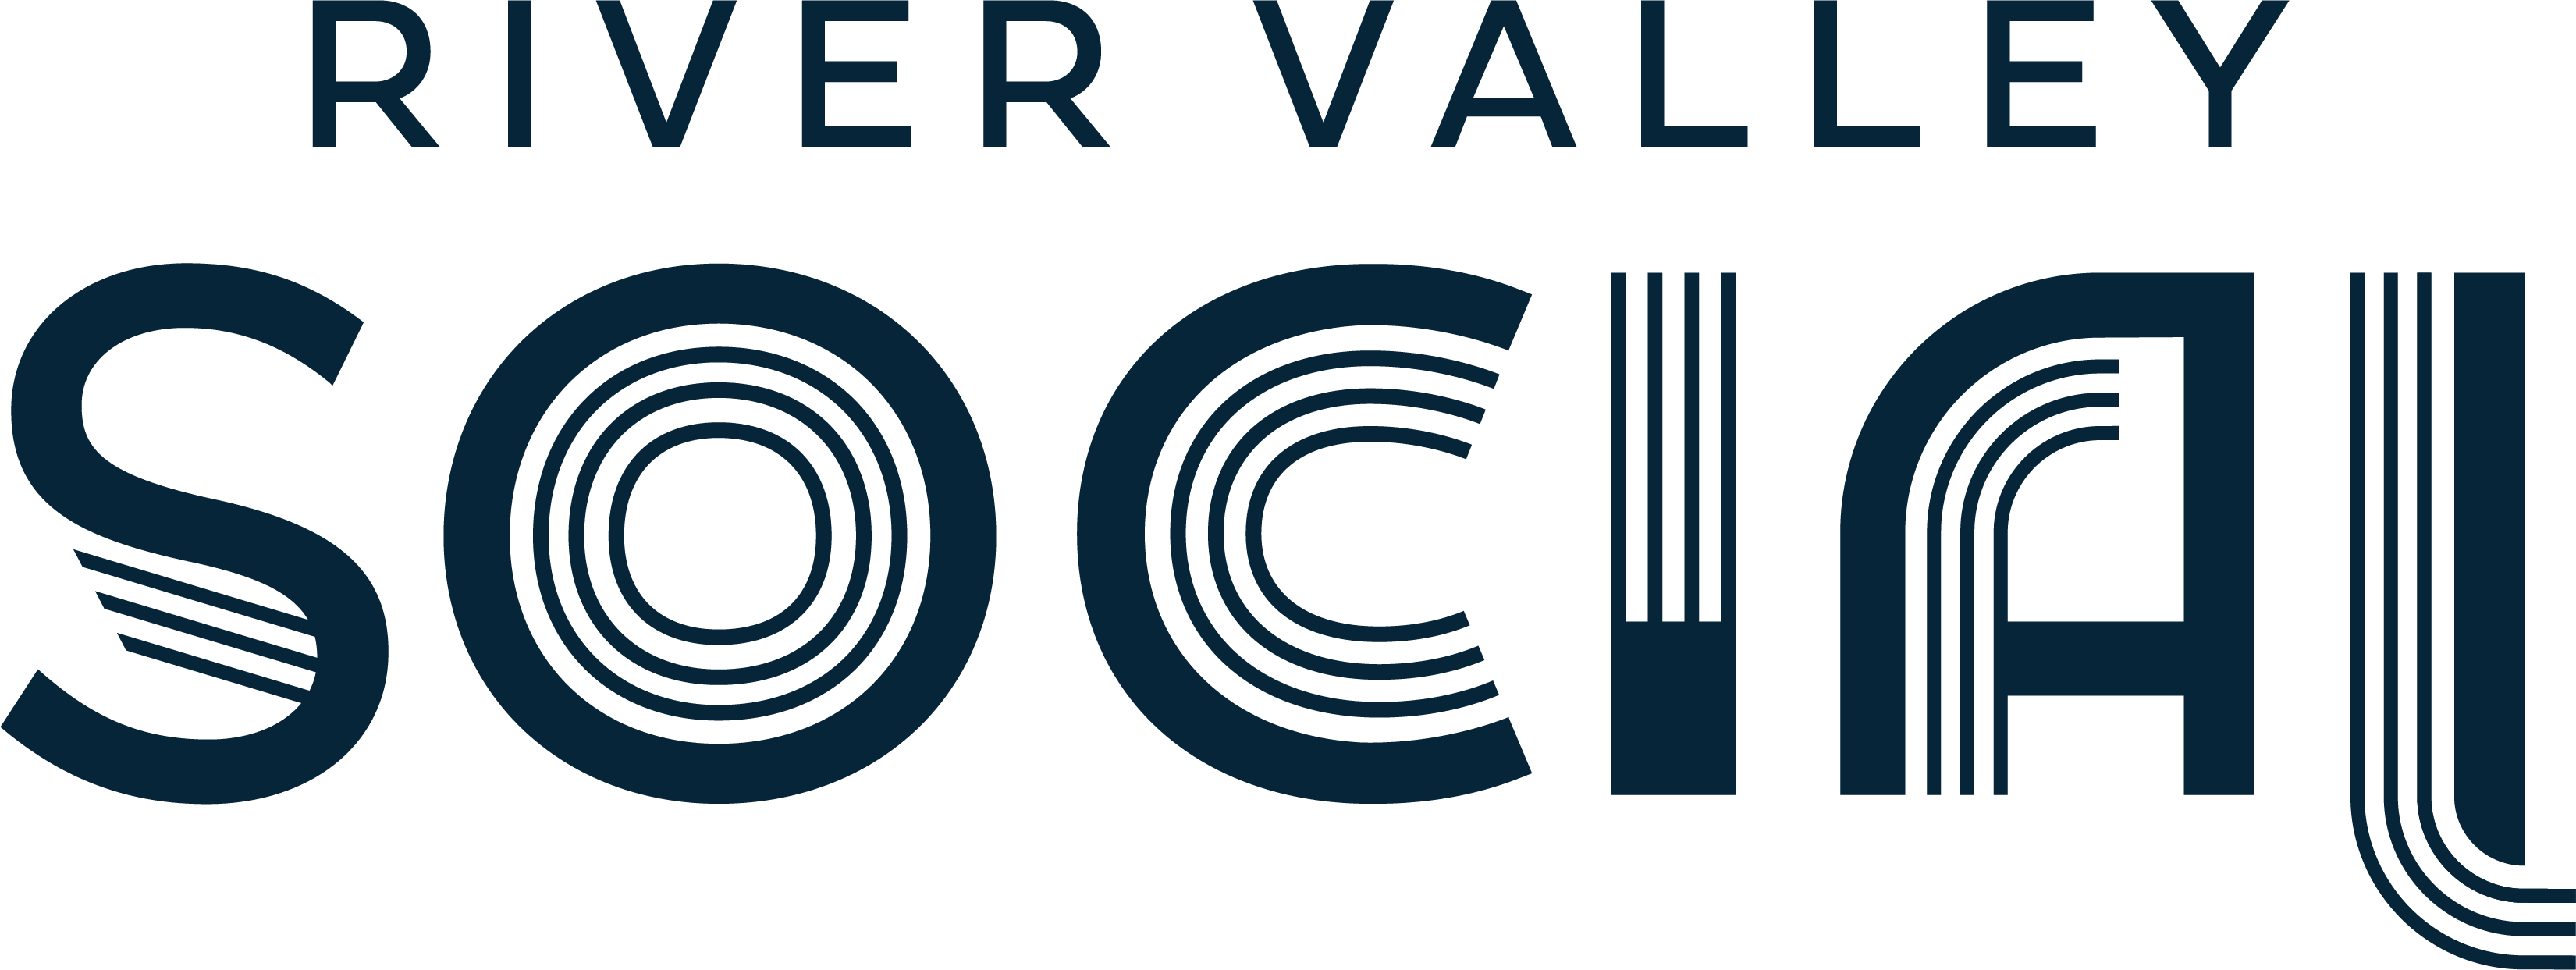 River Valley Social